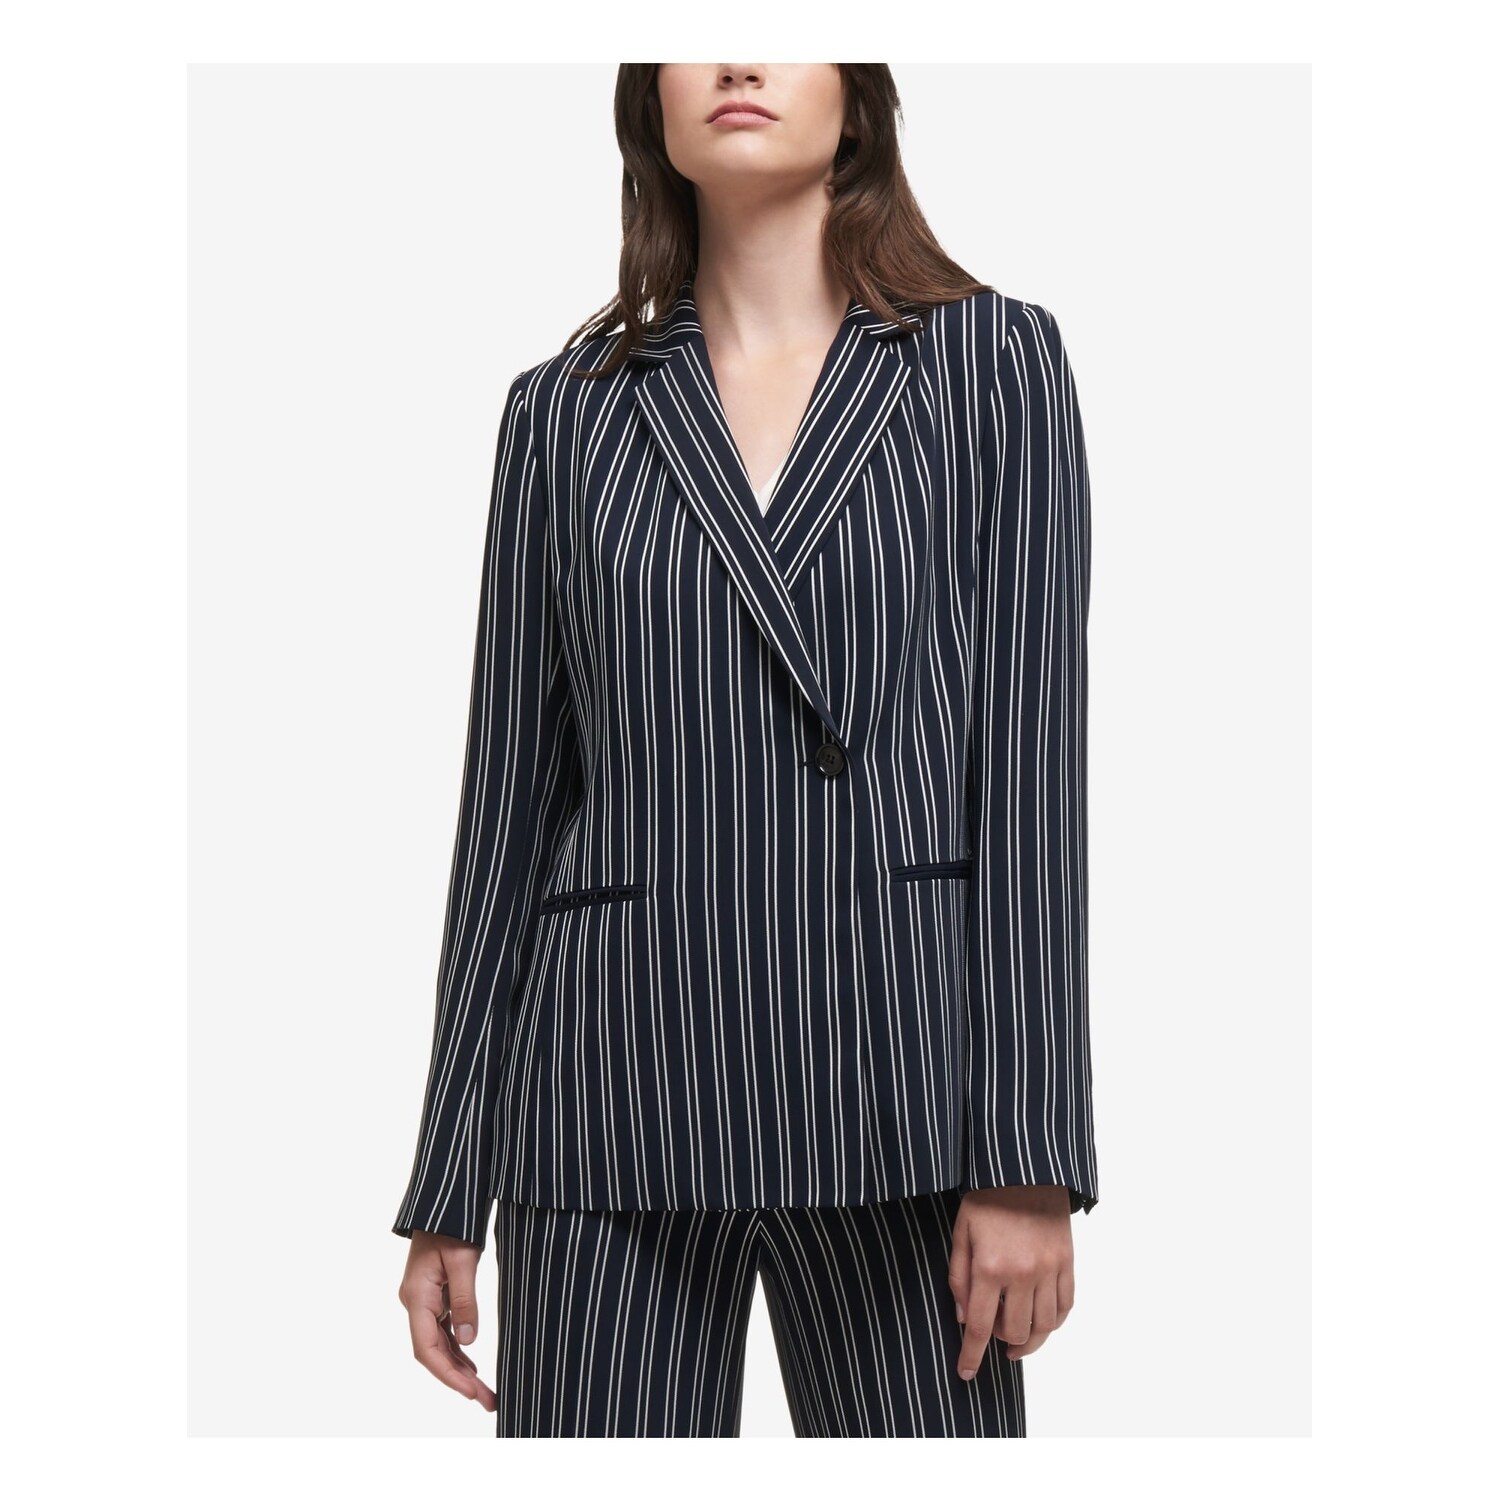 black striped blazer outfit